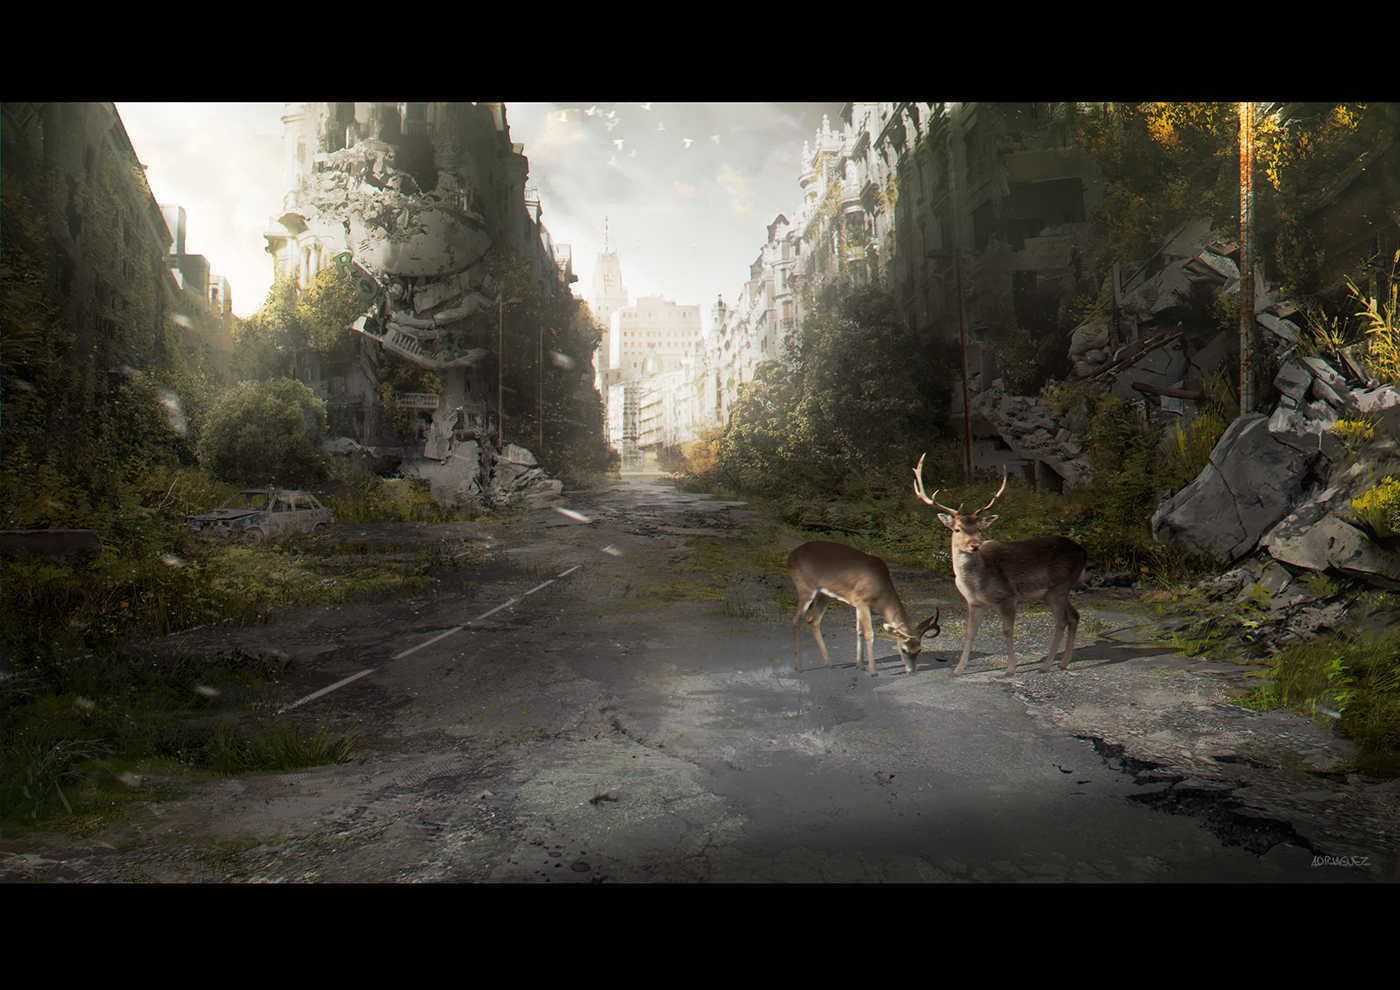 Matte Painting concept art Drawing  ILLUSTRATION  apocalypse animals deer madrid city spain